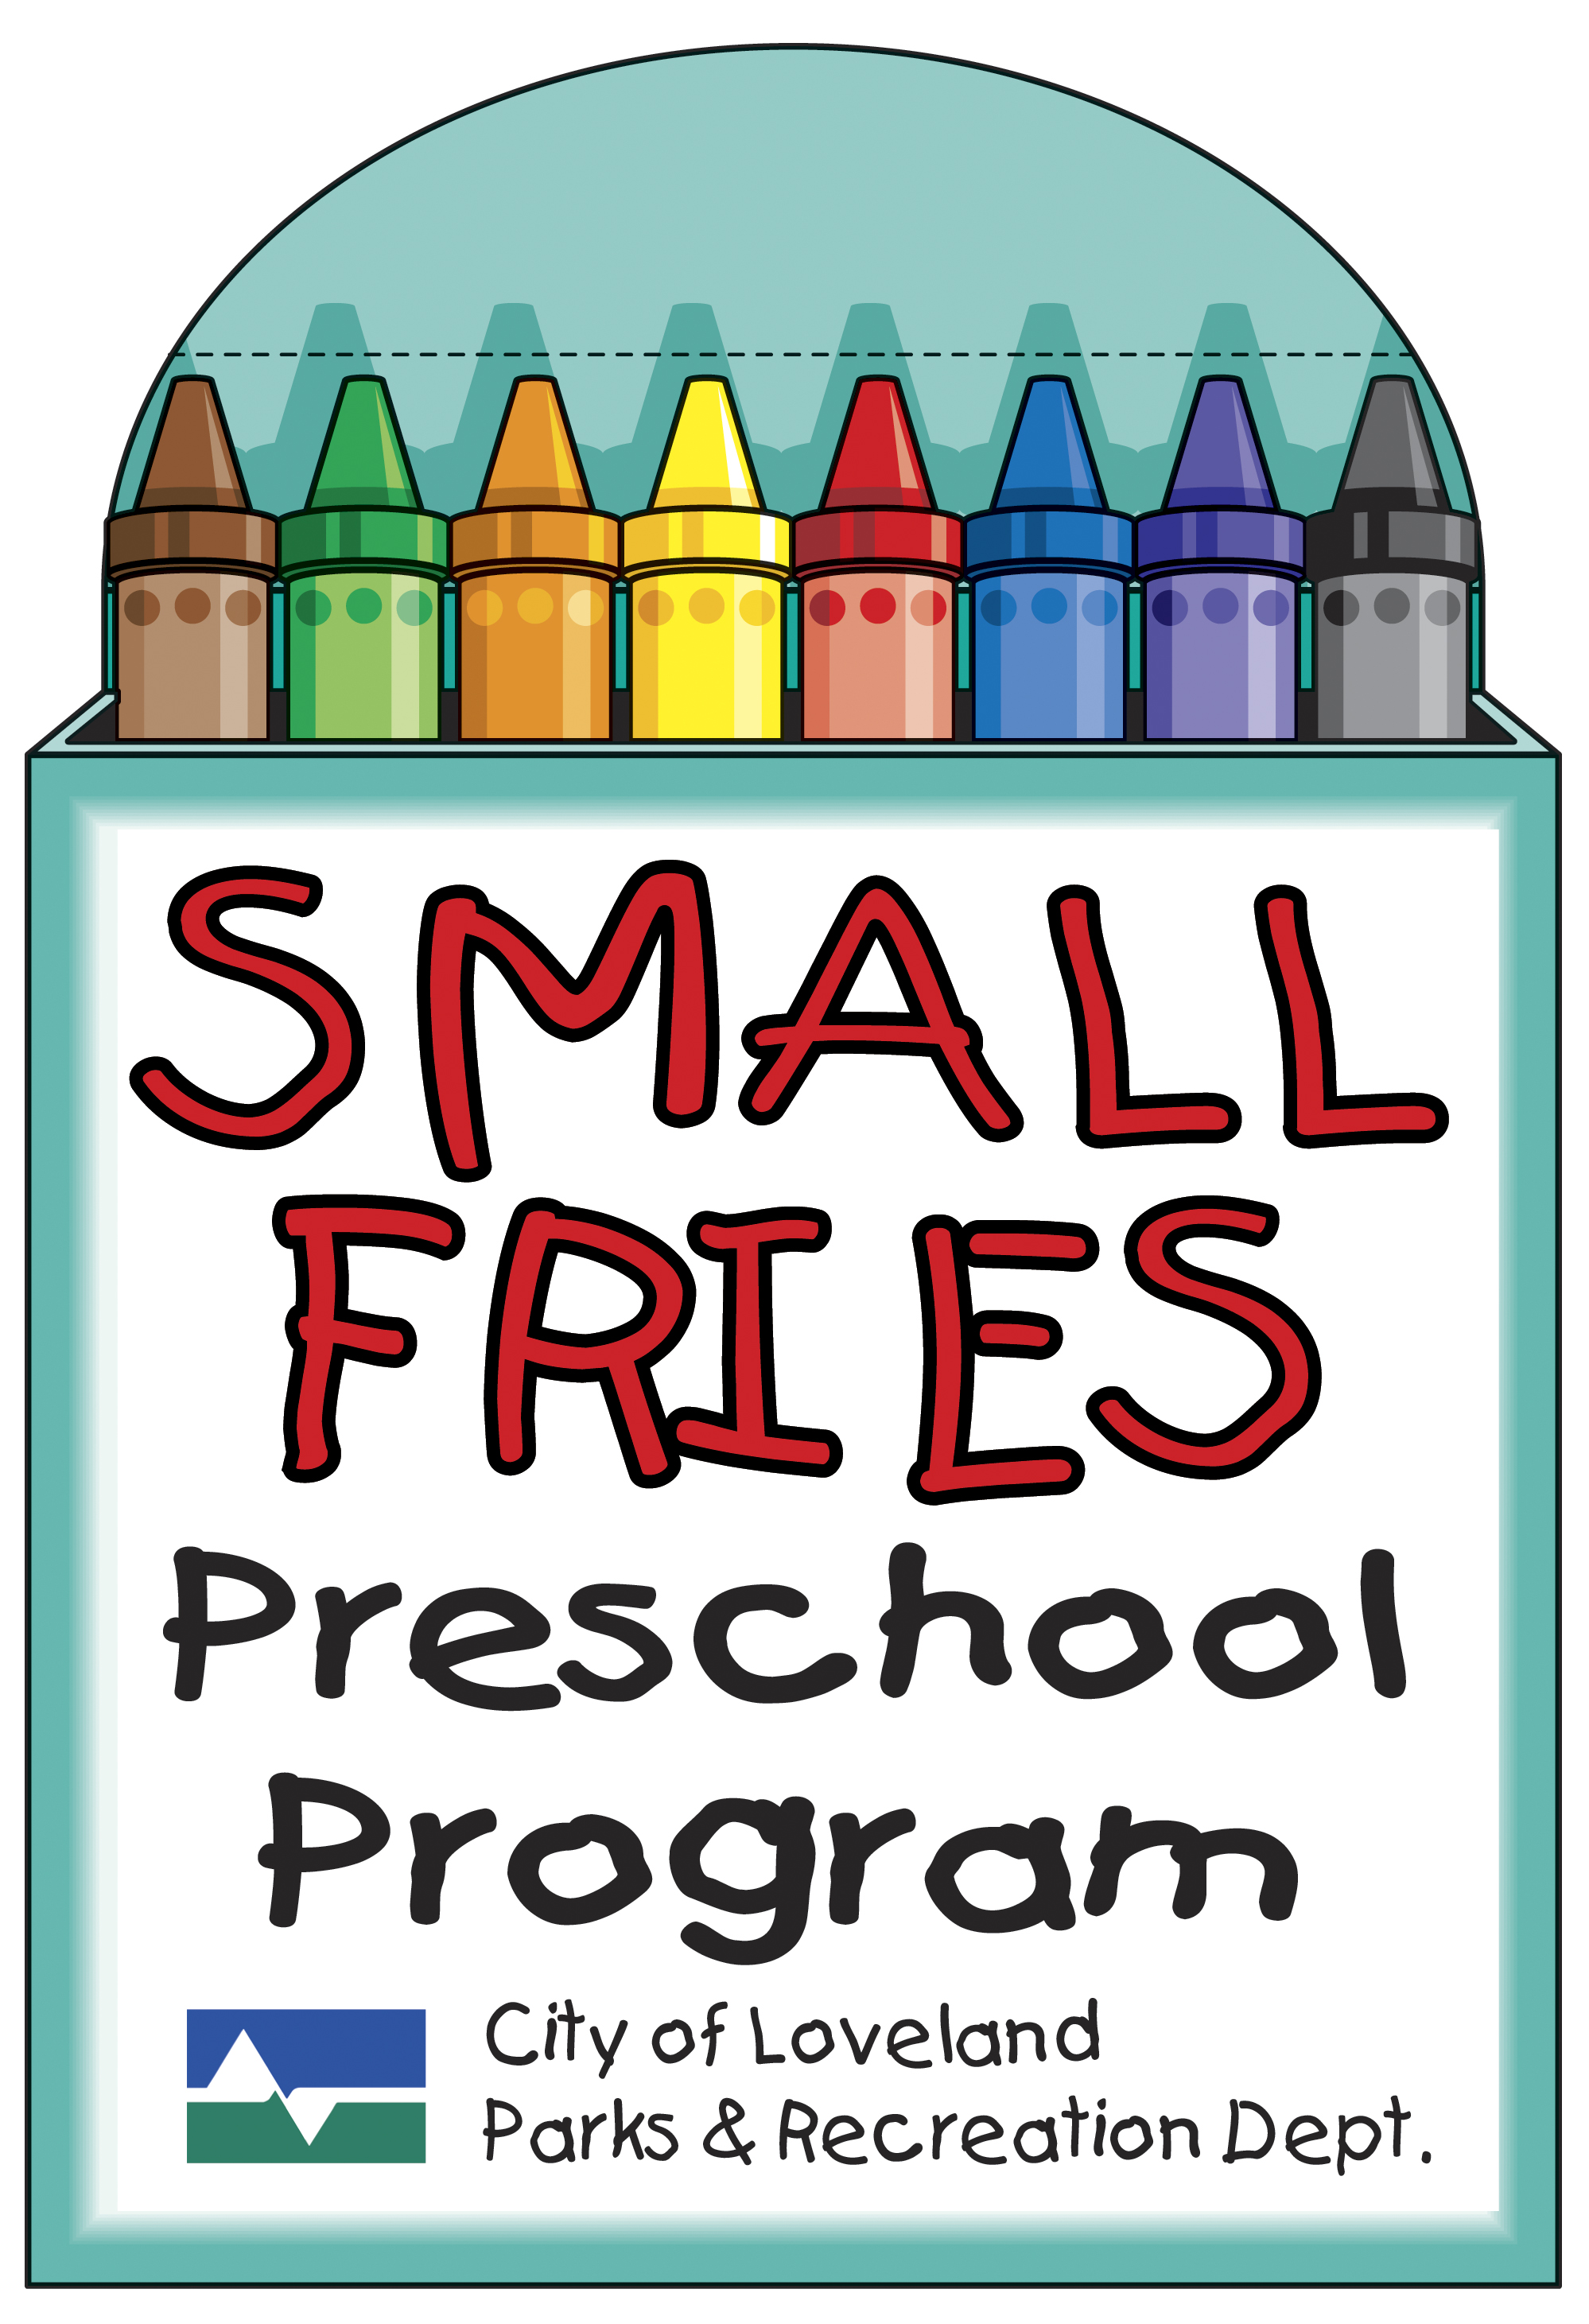 Small Fries Preschool Program City of Loveland Parks & Rec Dept